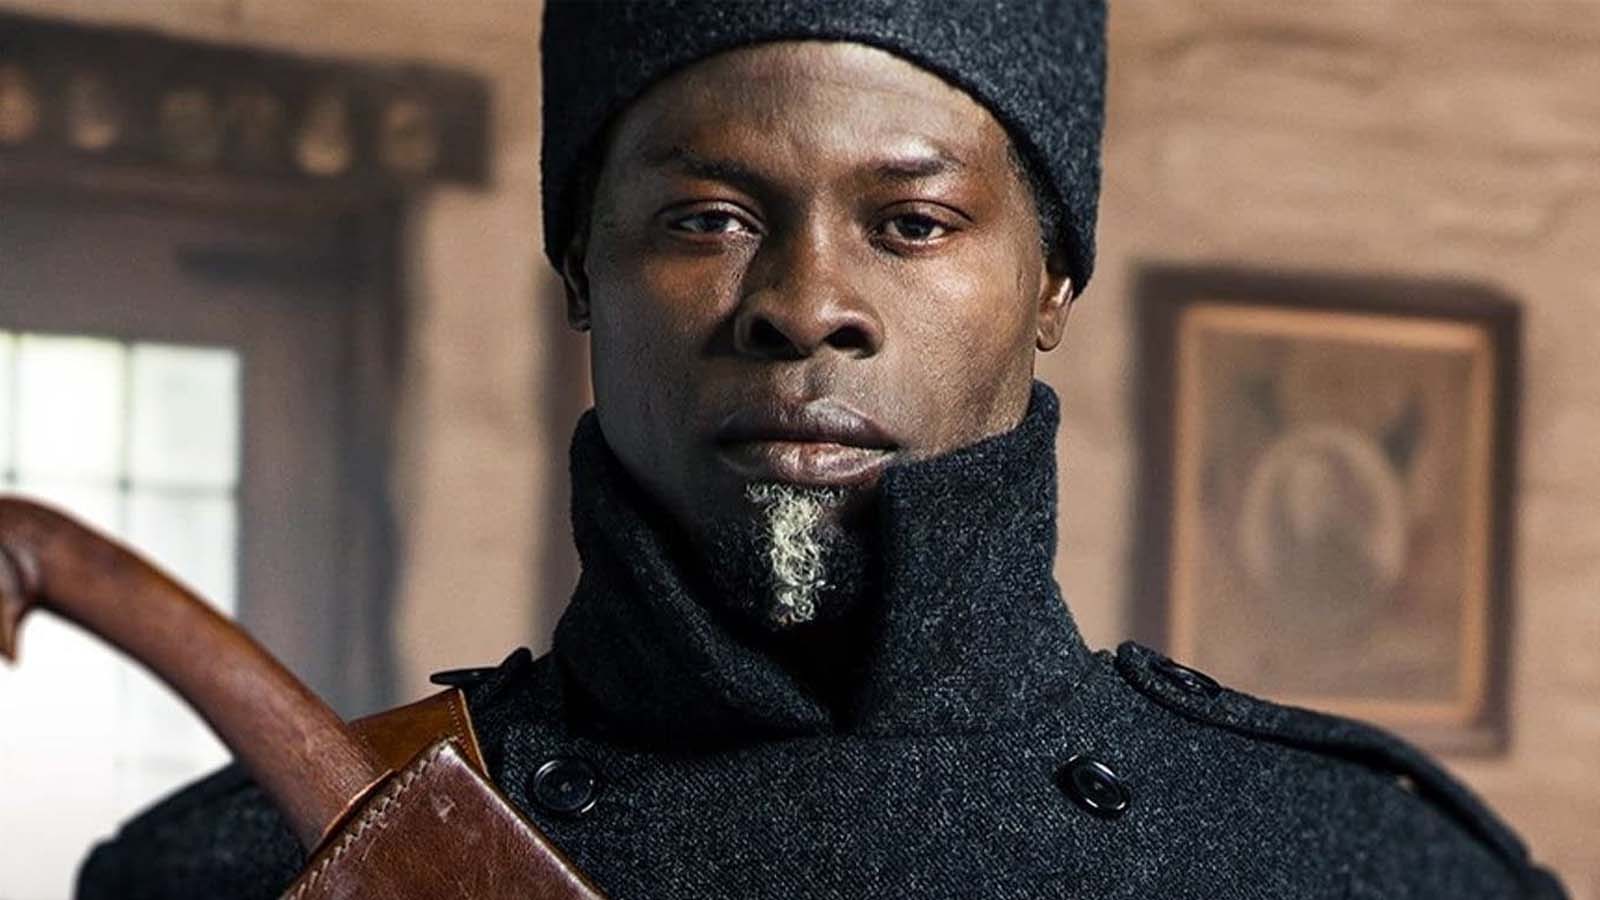 Djimon Hounsou as Shola in The King’s Man. Image © 20th Century Studios